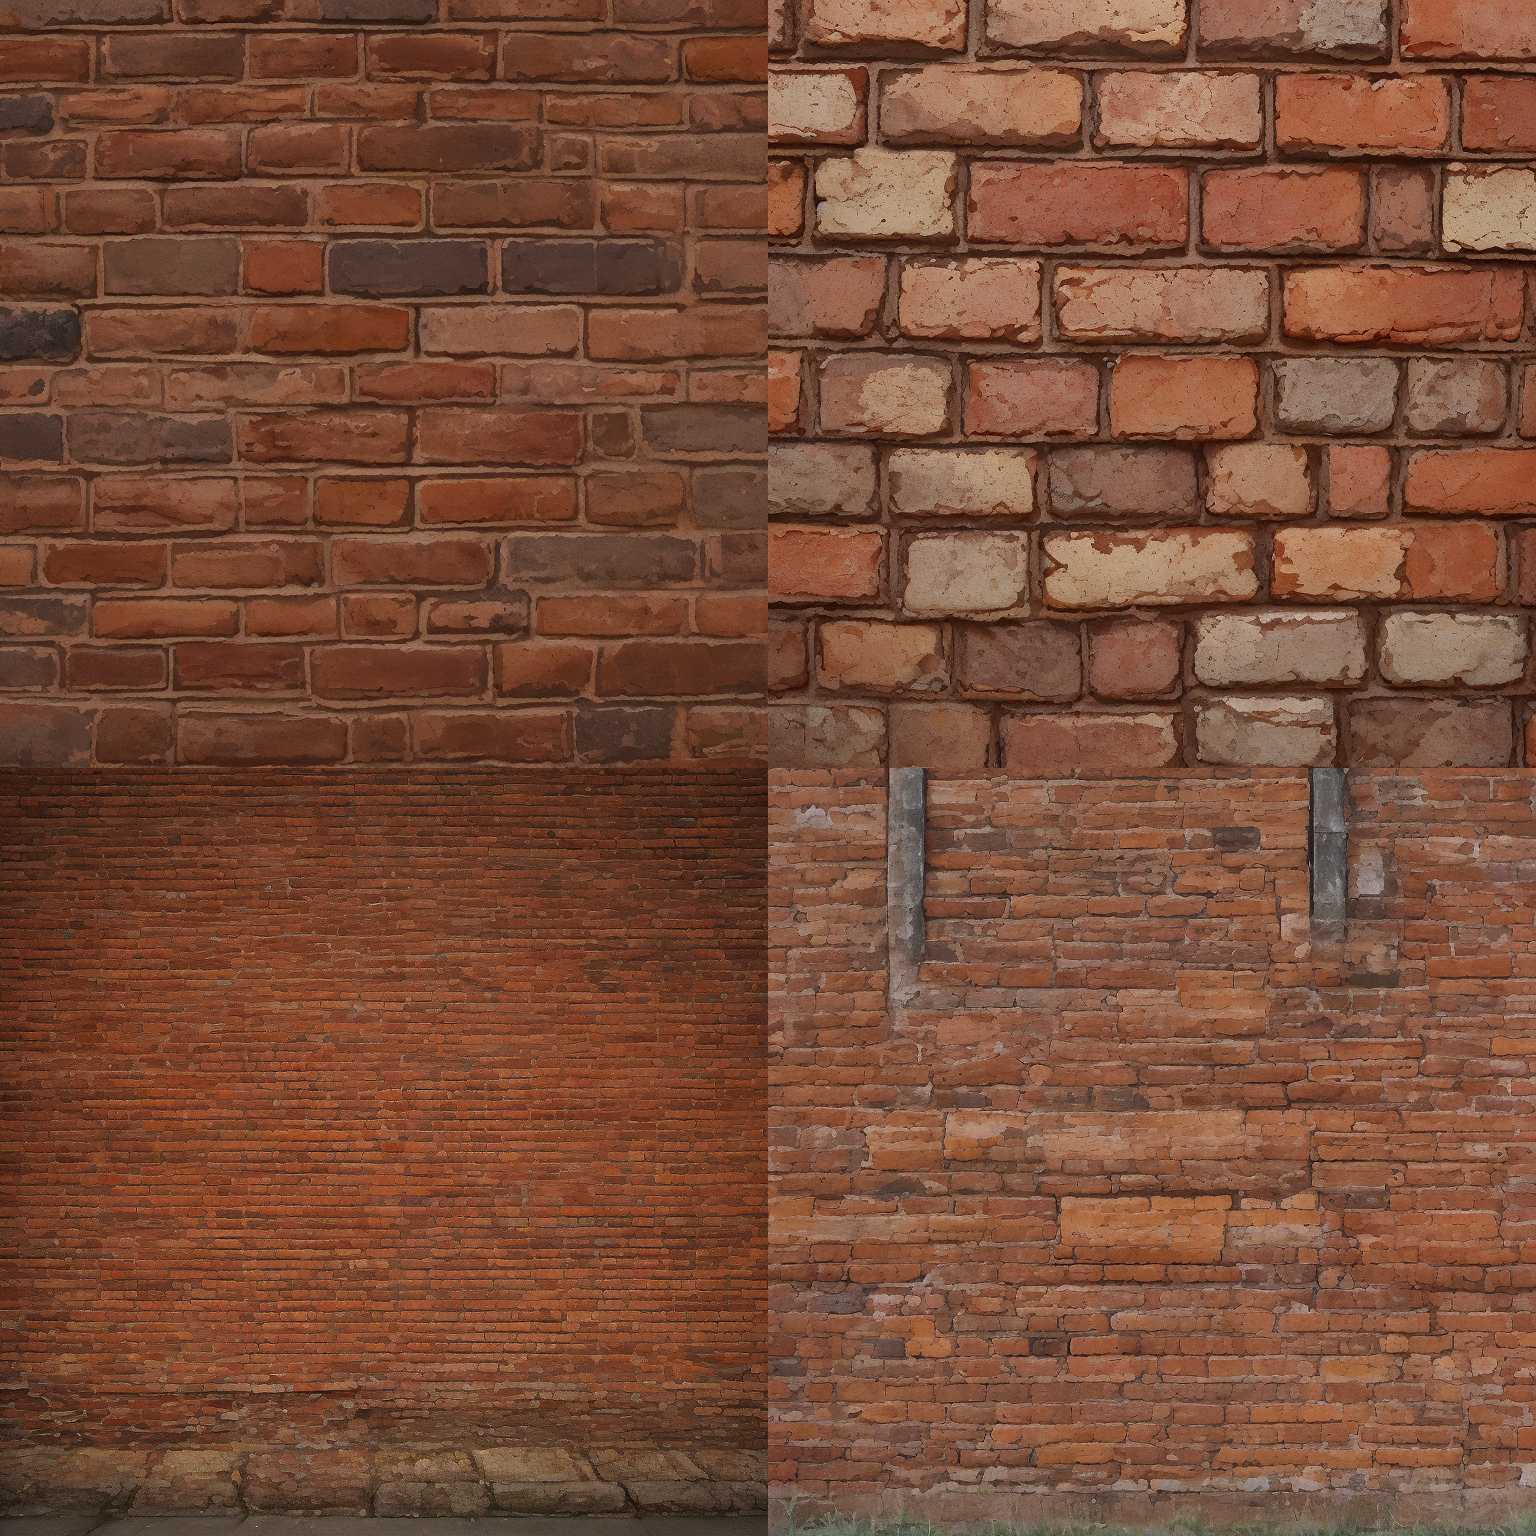 A brick